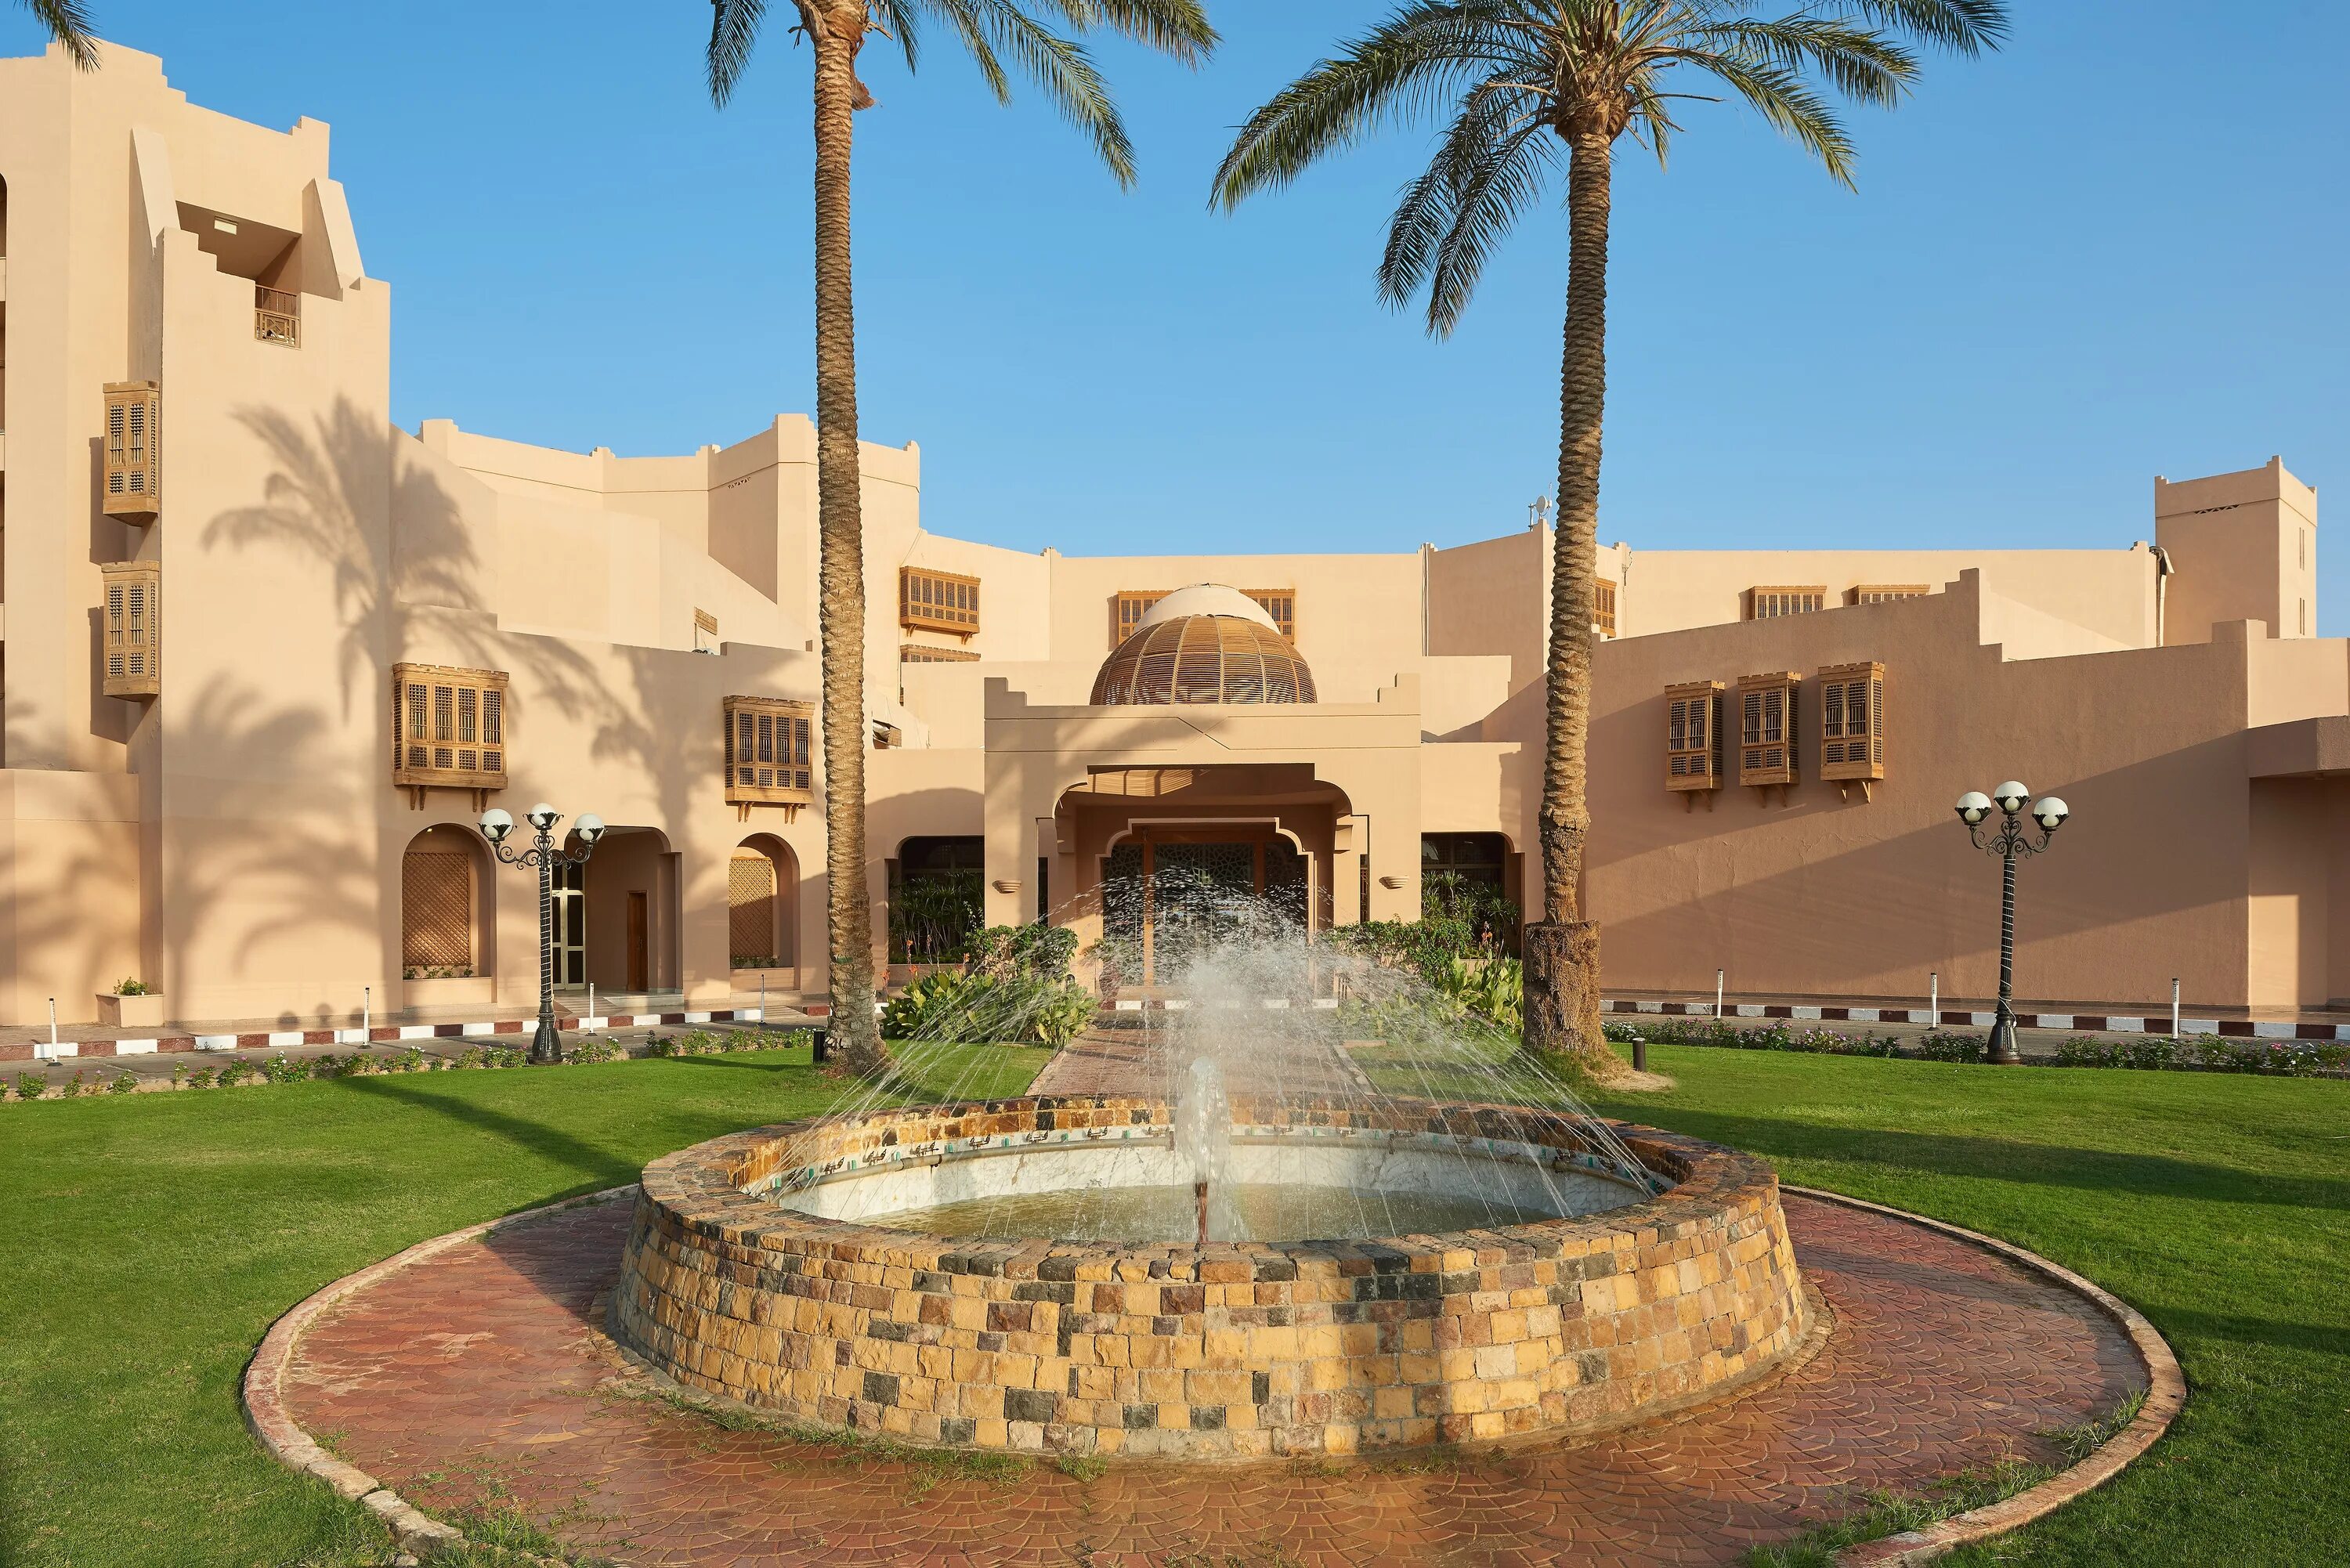 Отель Континенталь Египет Хургада. Continental Hotel Hurghada 5 Хургада. Континенталь отель Хургада 5. Отель Мовенпик Хургада 5 звезд.